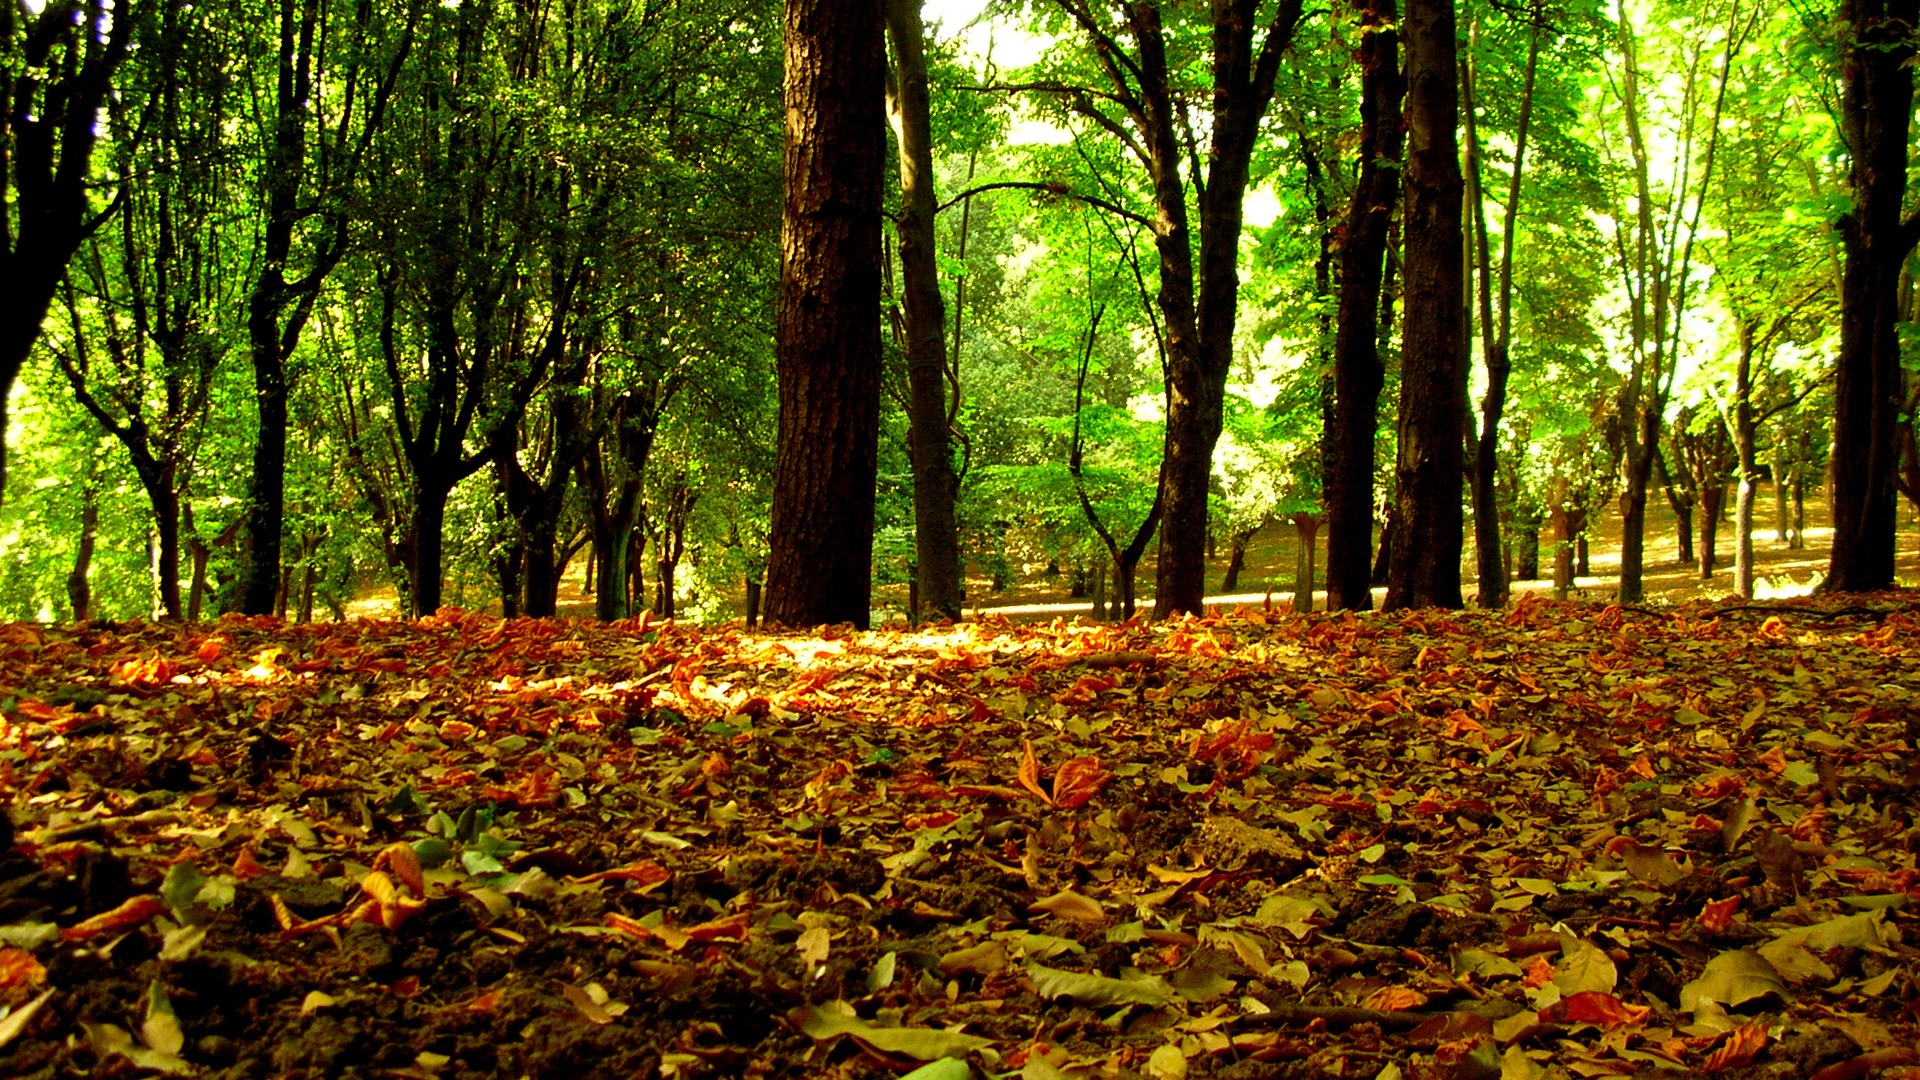 Forest Leaves Wallpaper Autumn Nature Wallpaper in jpg